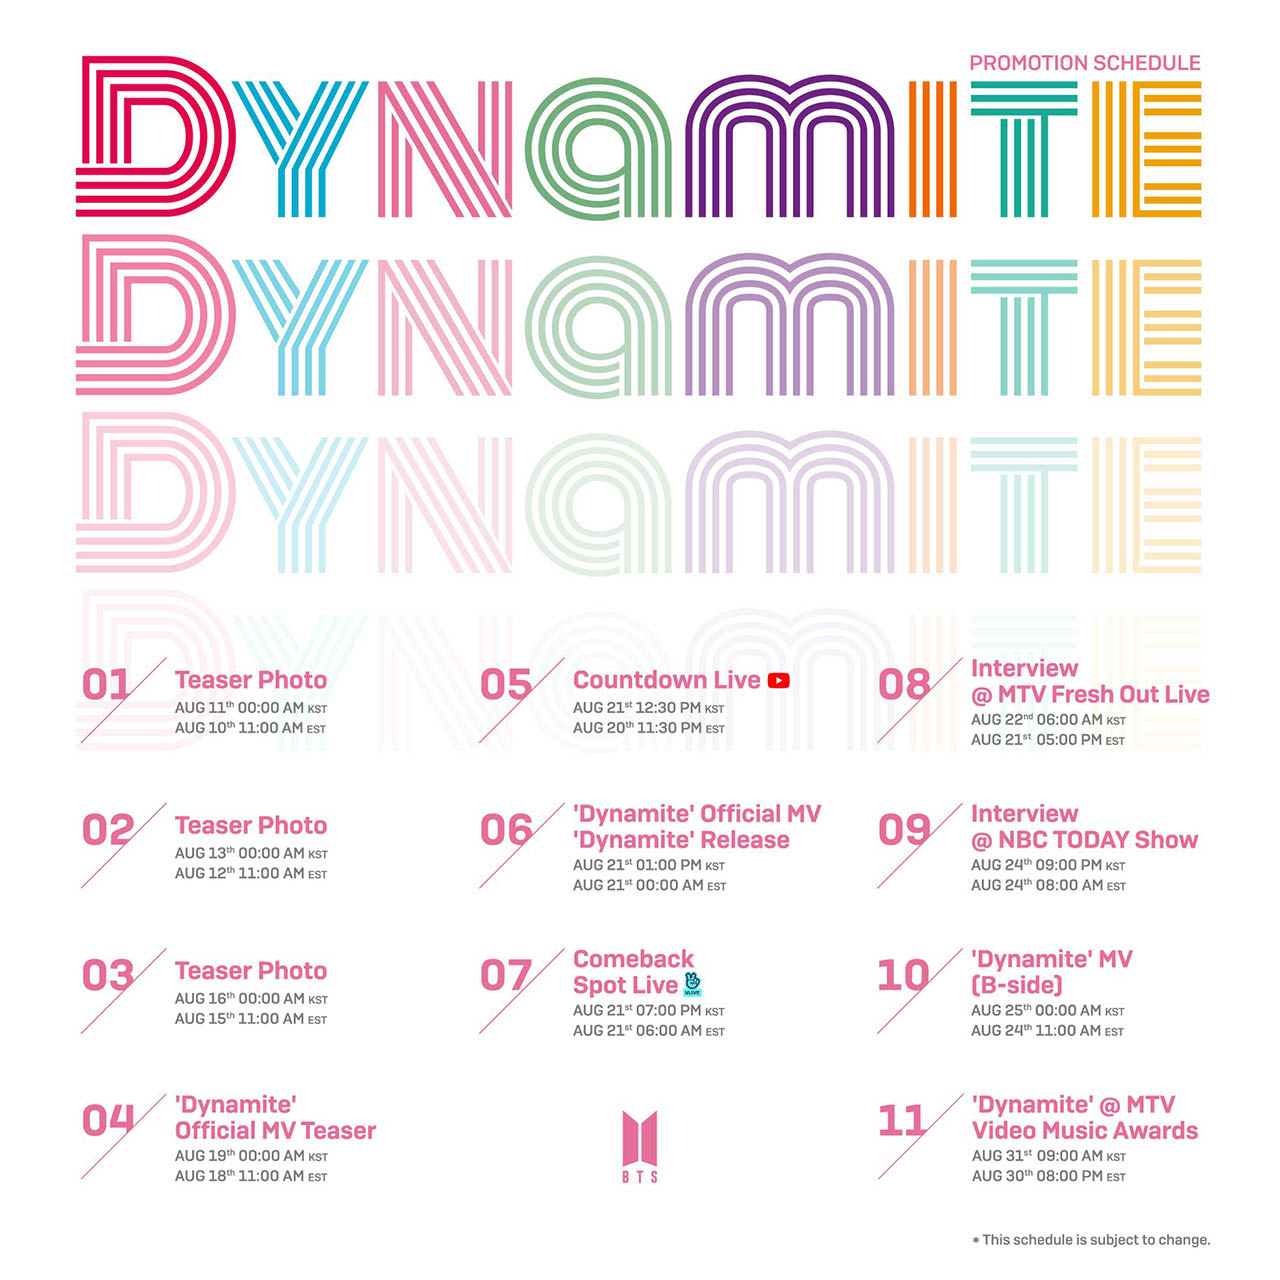 BTS, 'Dynamite' MV teaser video has released